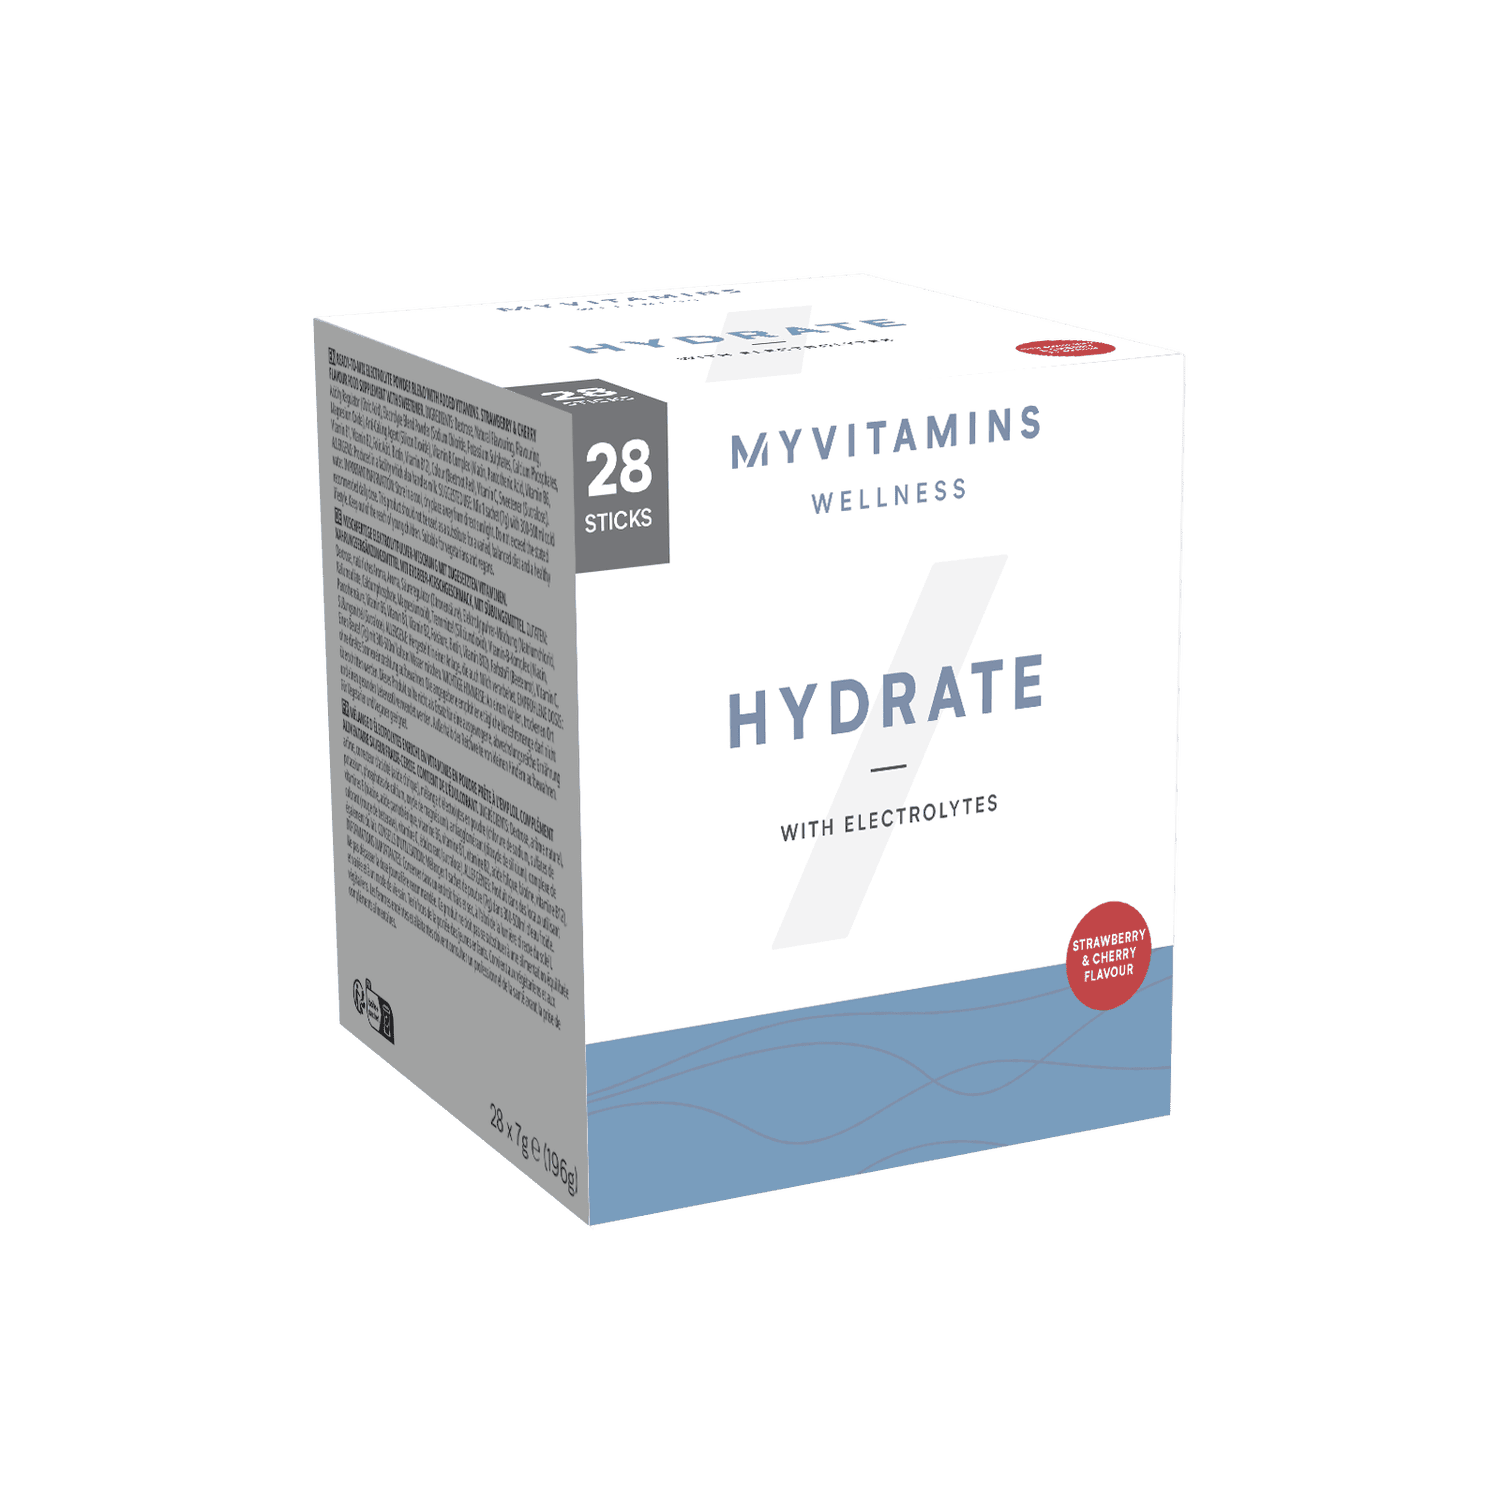 Hydrate - Fresa y Cereza